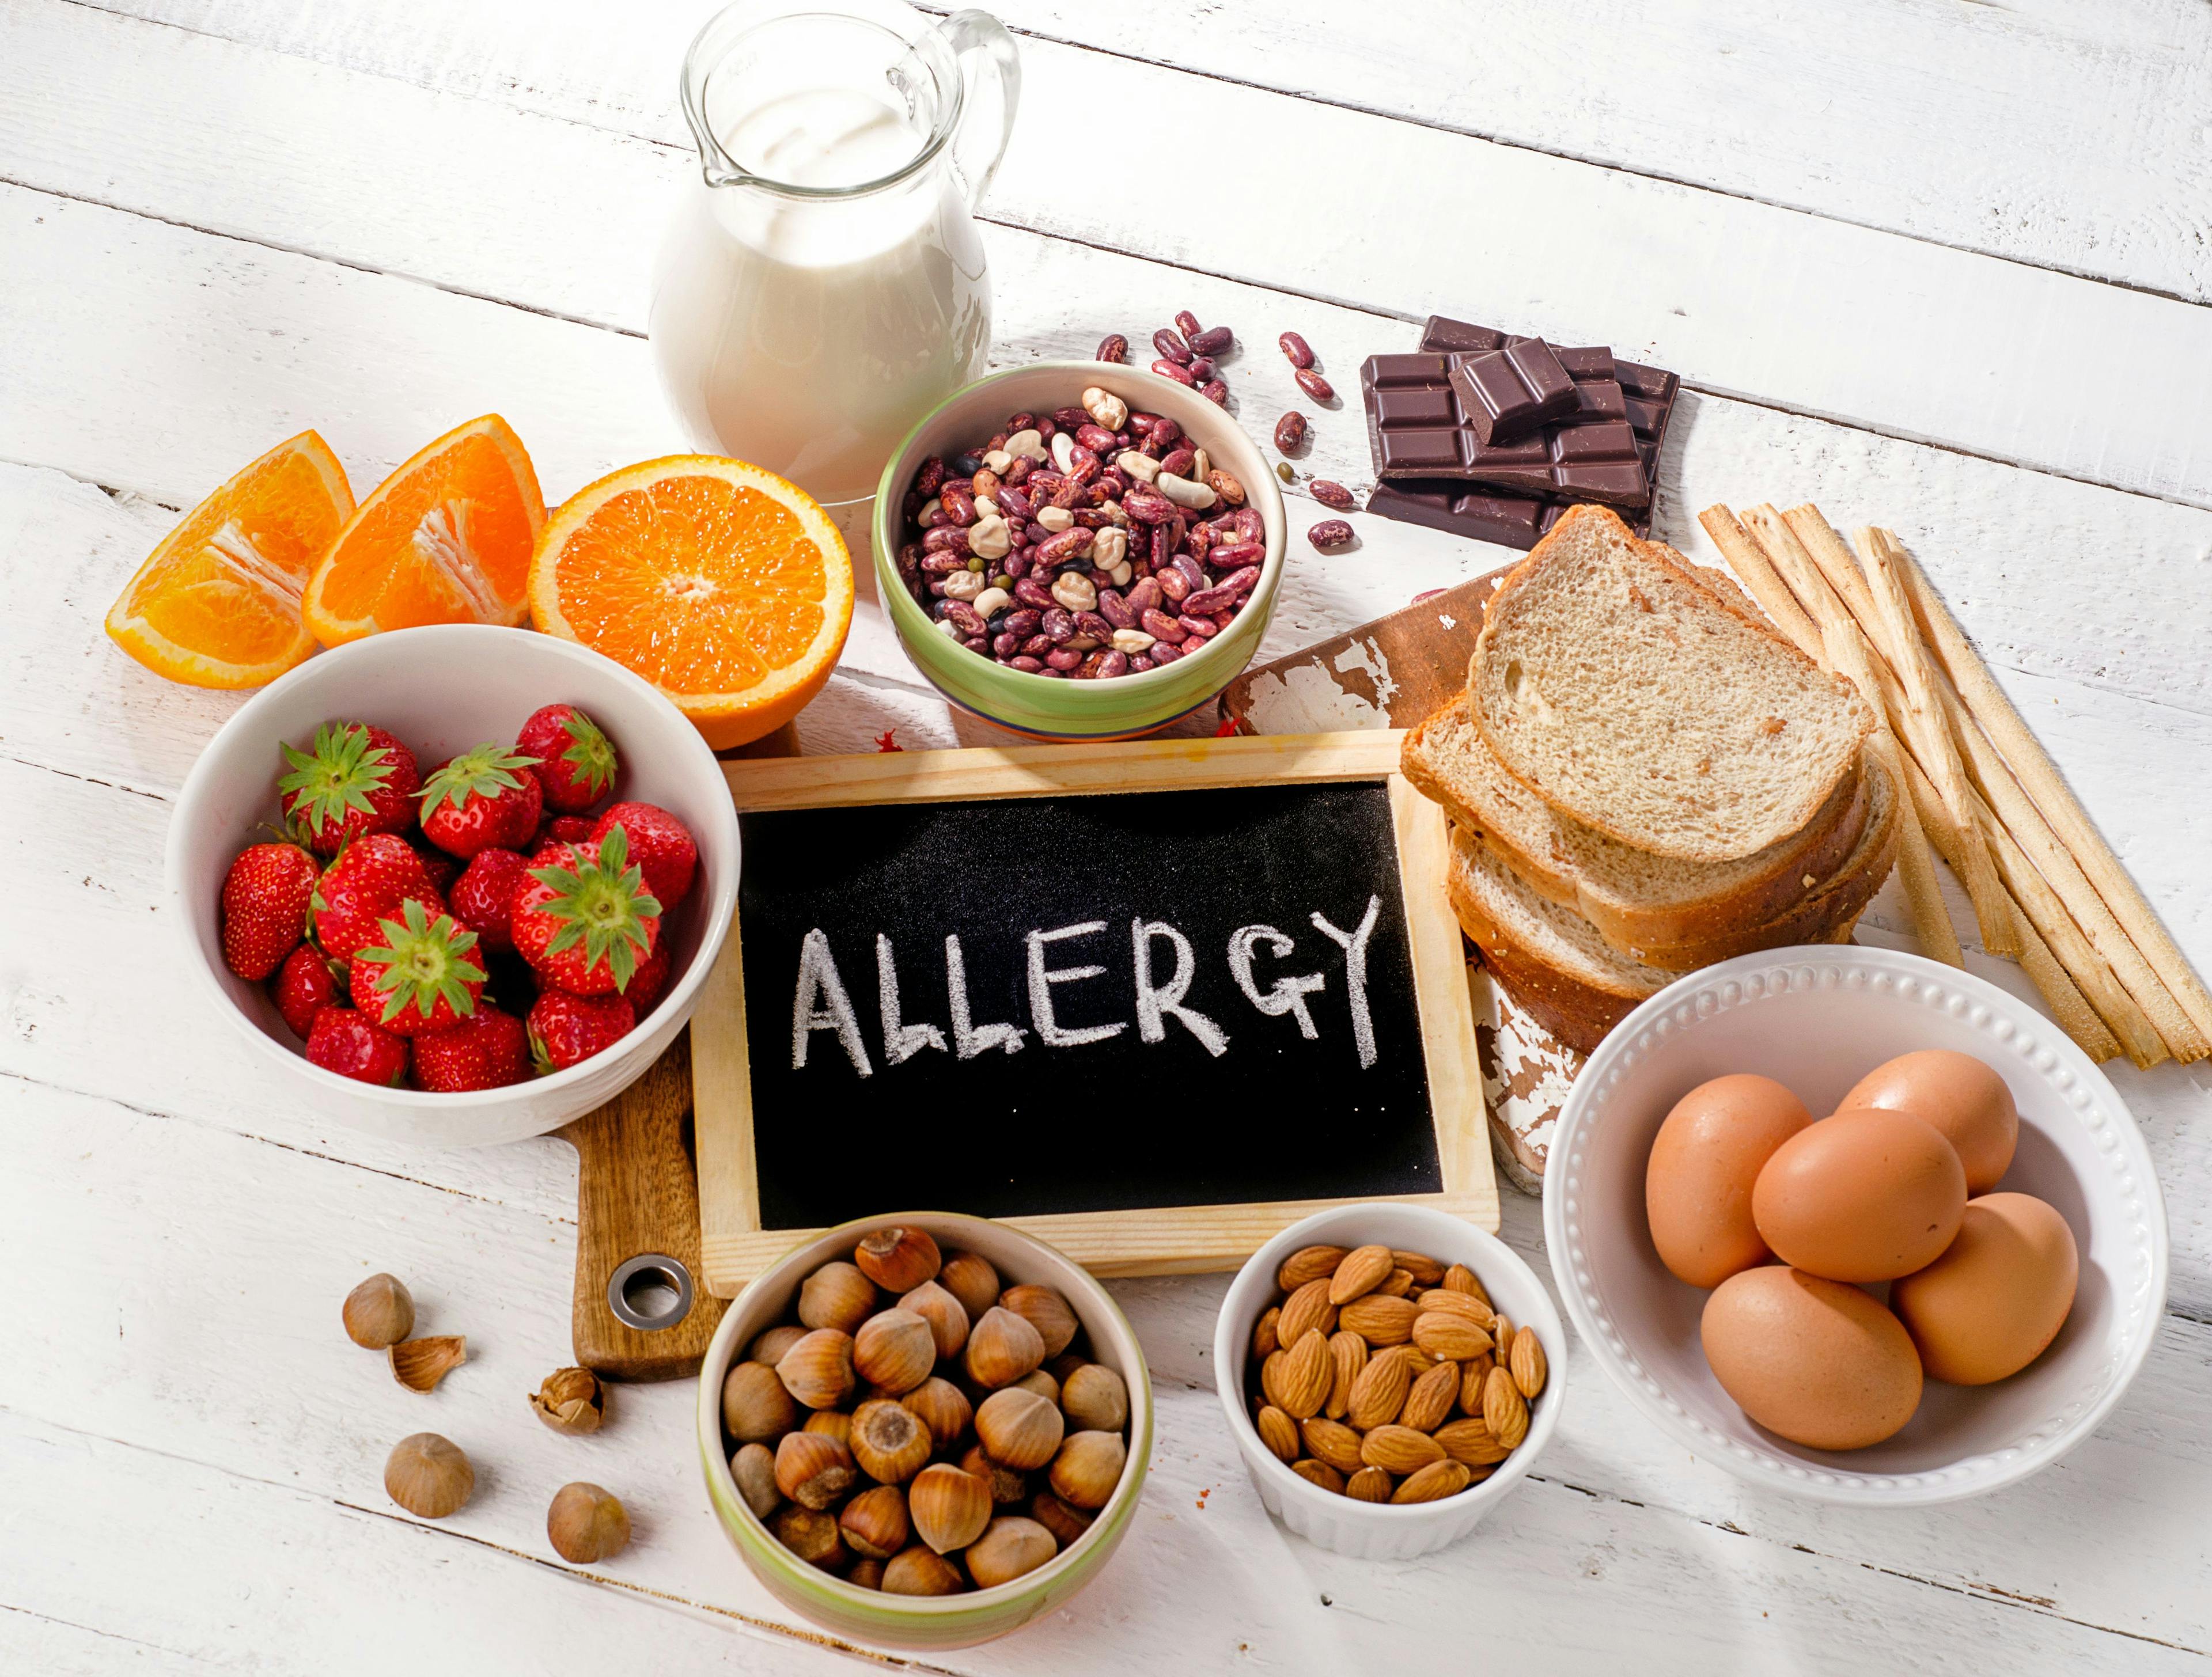 Image credit: bit24 | stock.adobe.com. Food allergy. Allergic food on wooden background.